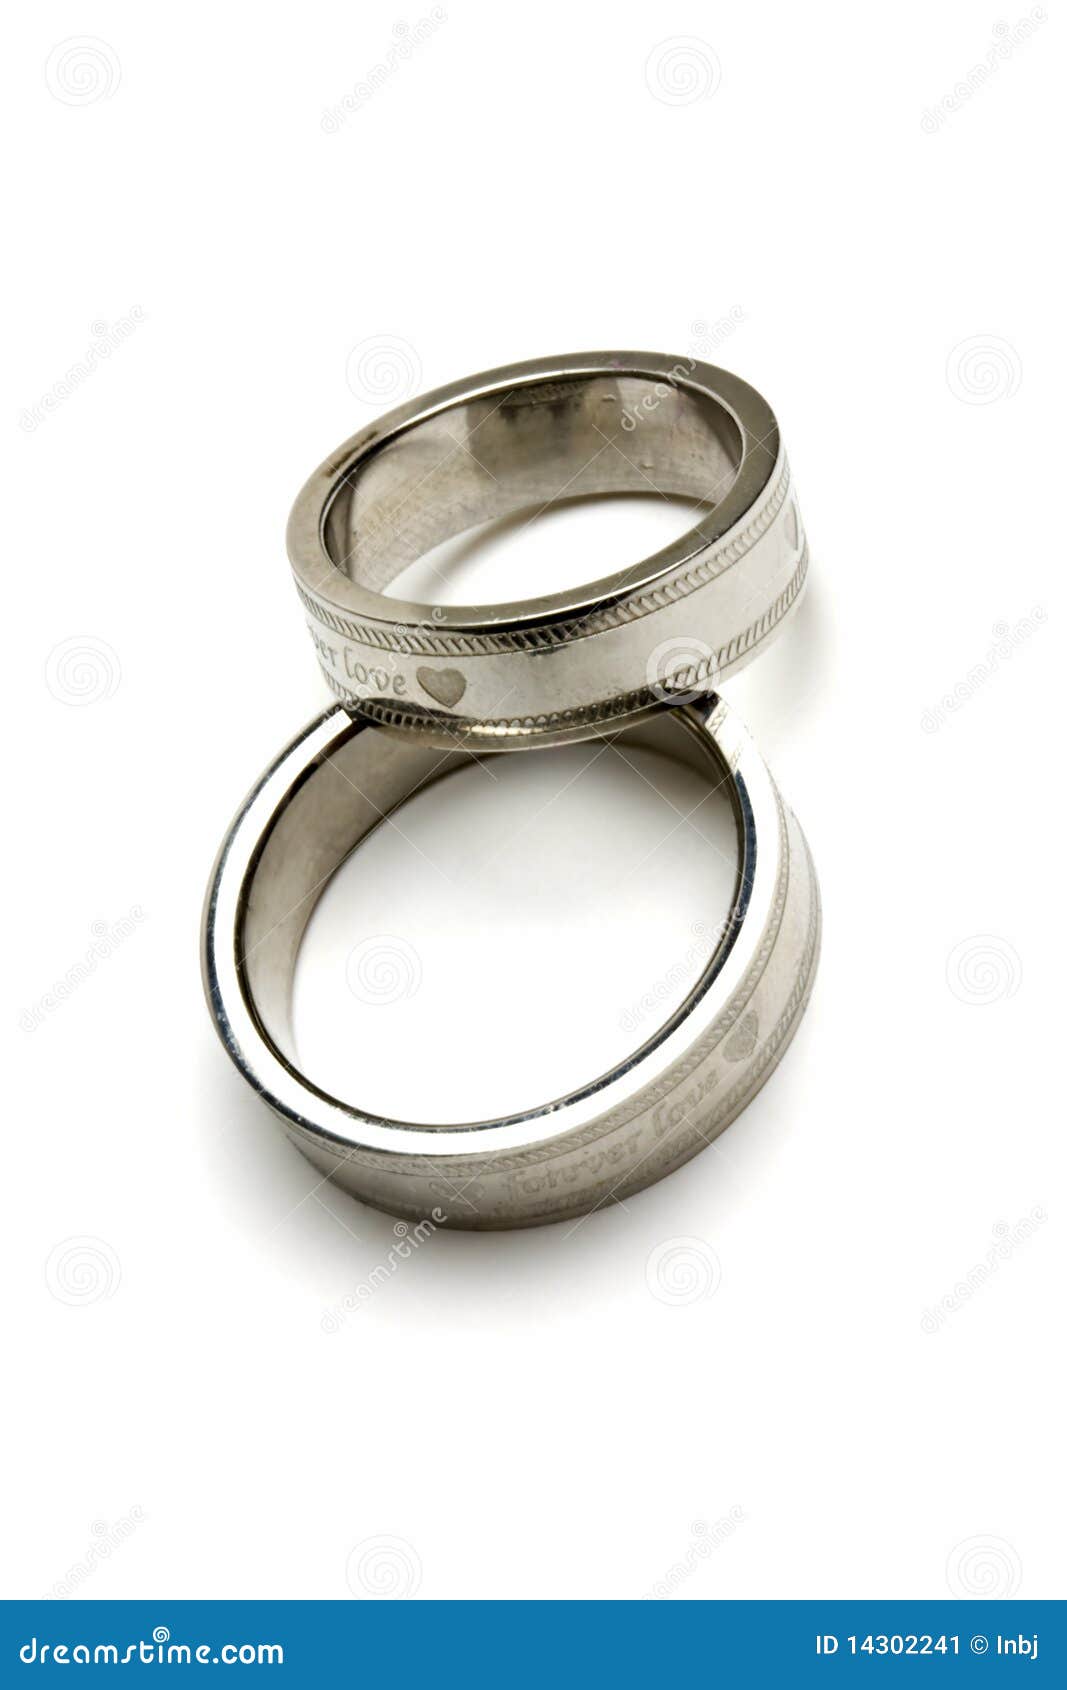  Pair  Of Wedding  Rings  Stock Image Image 14302241